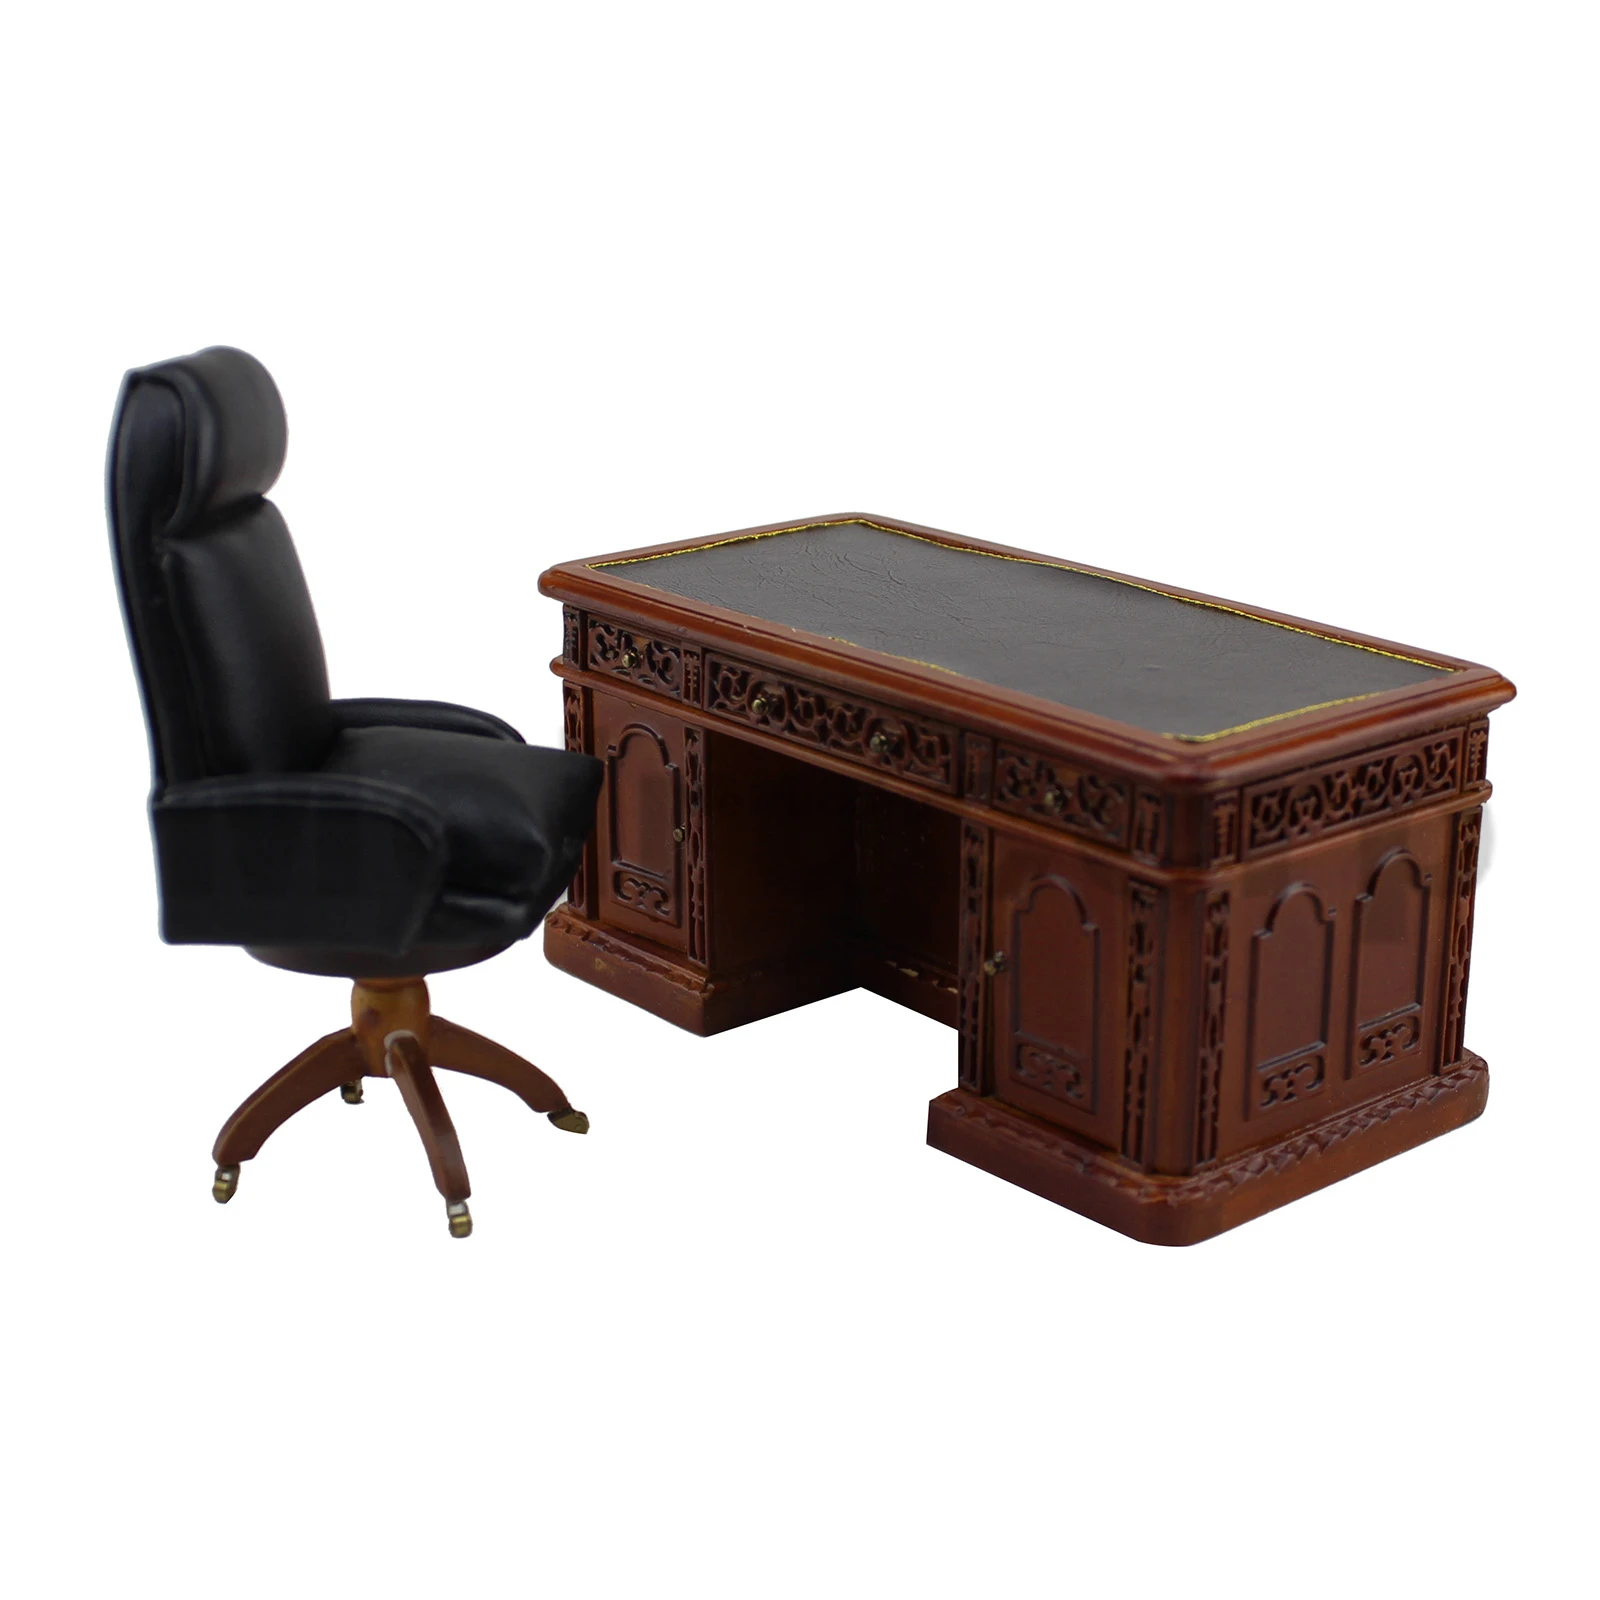 Desk Roll Top Chair Globe Office Set miniature dollhouse T3645 1/12 scale 